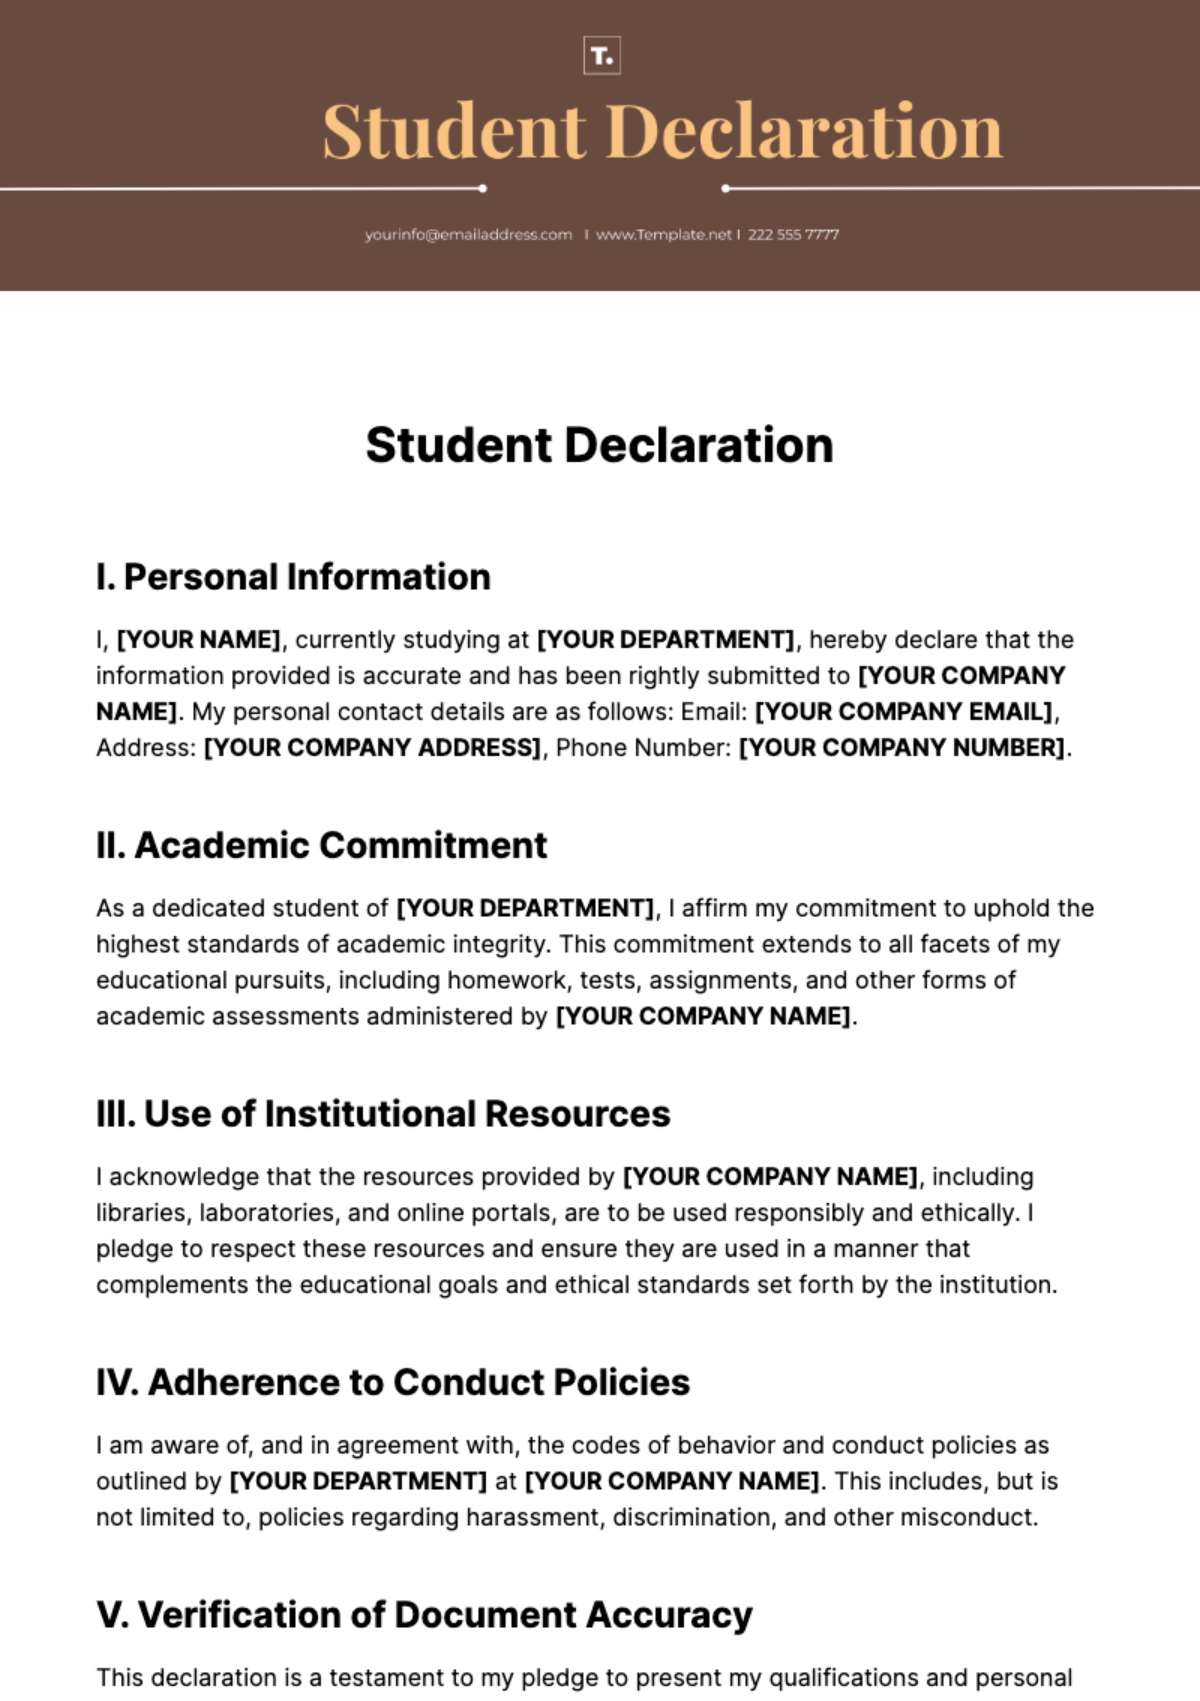 Student Declaration Template